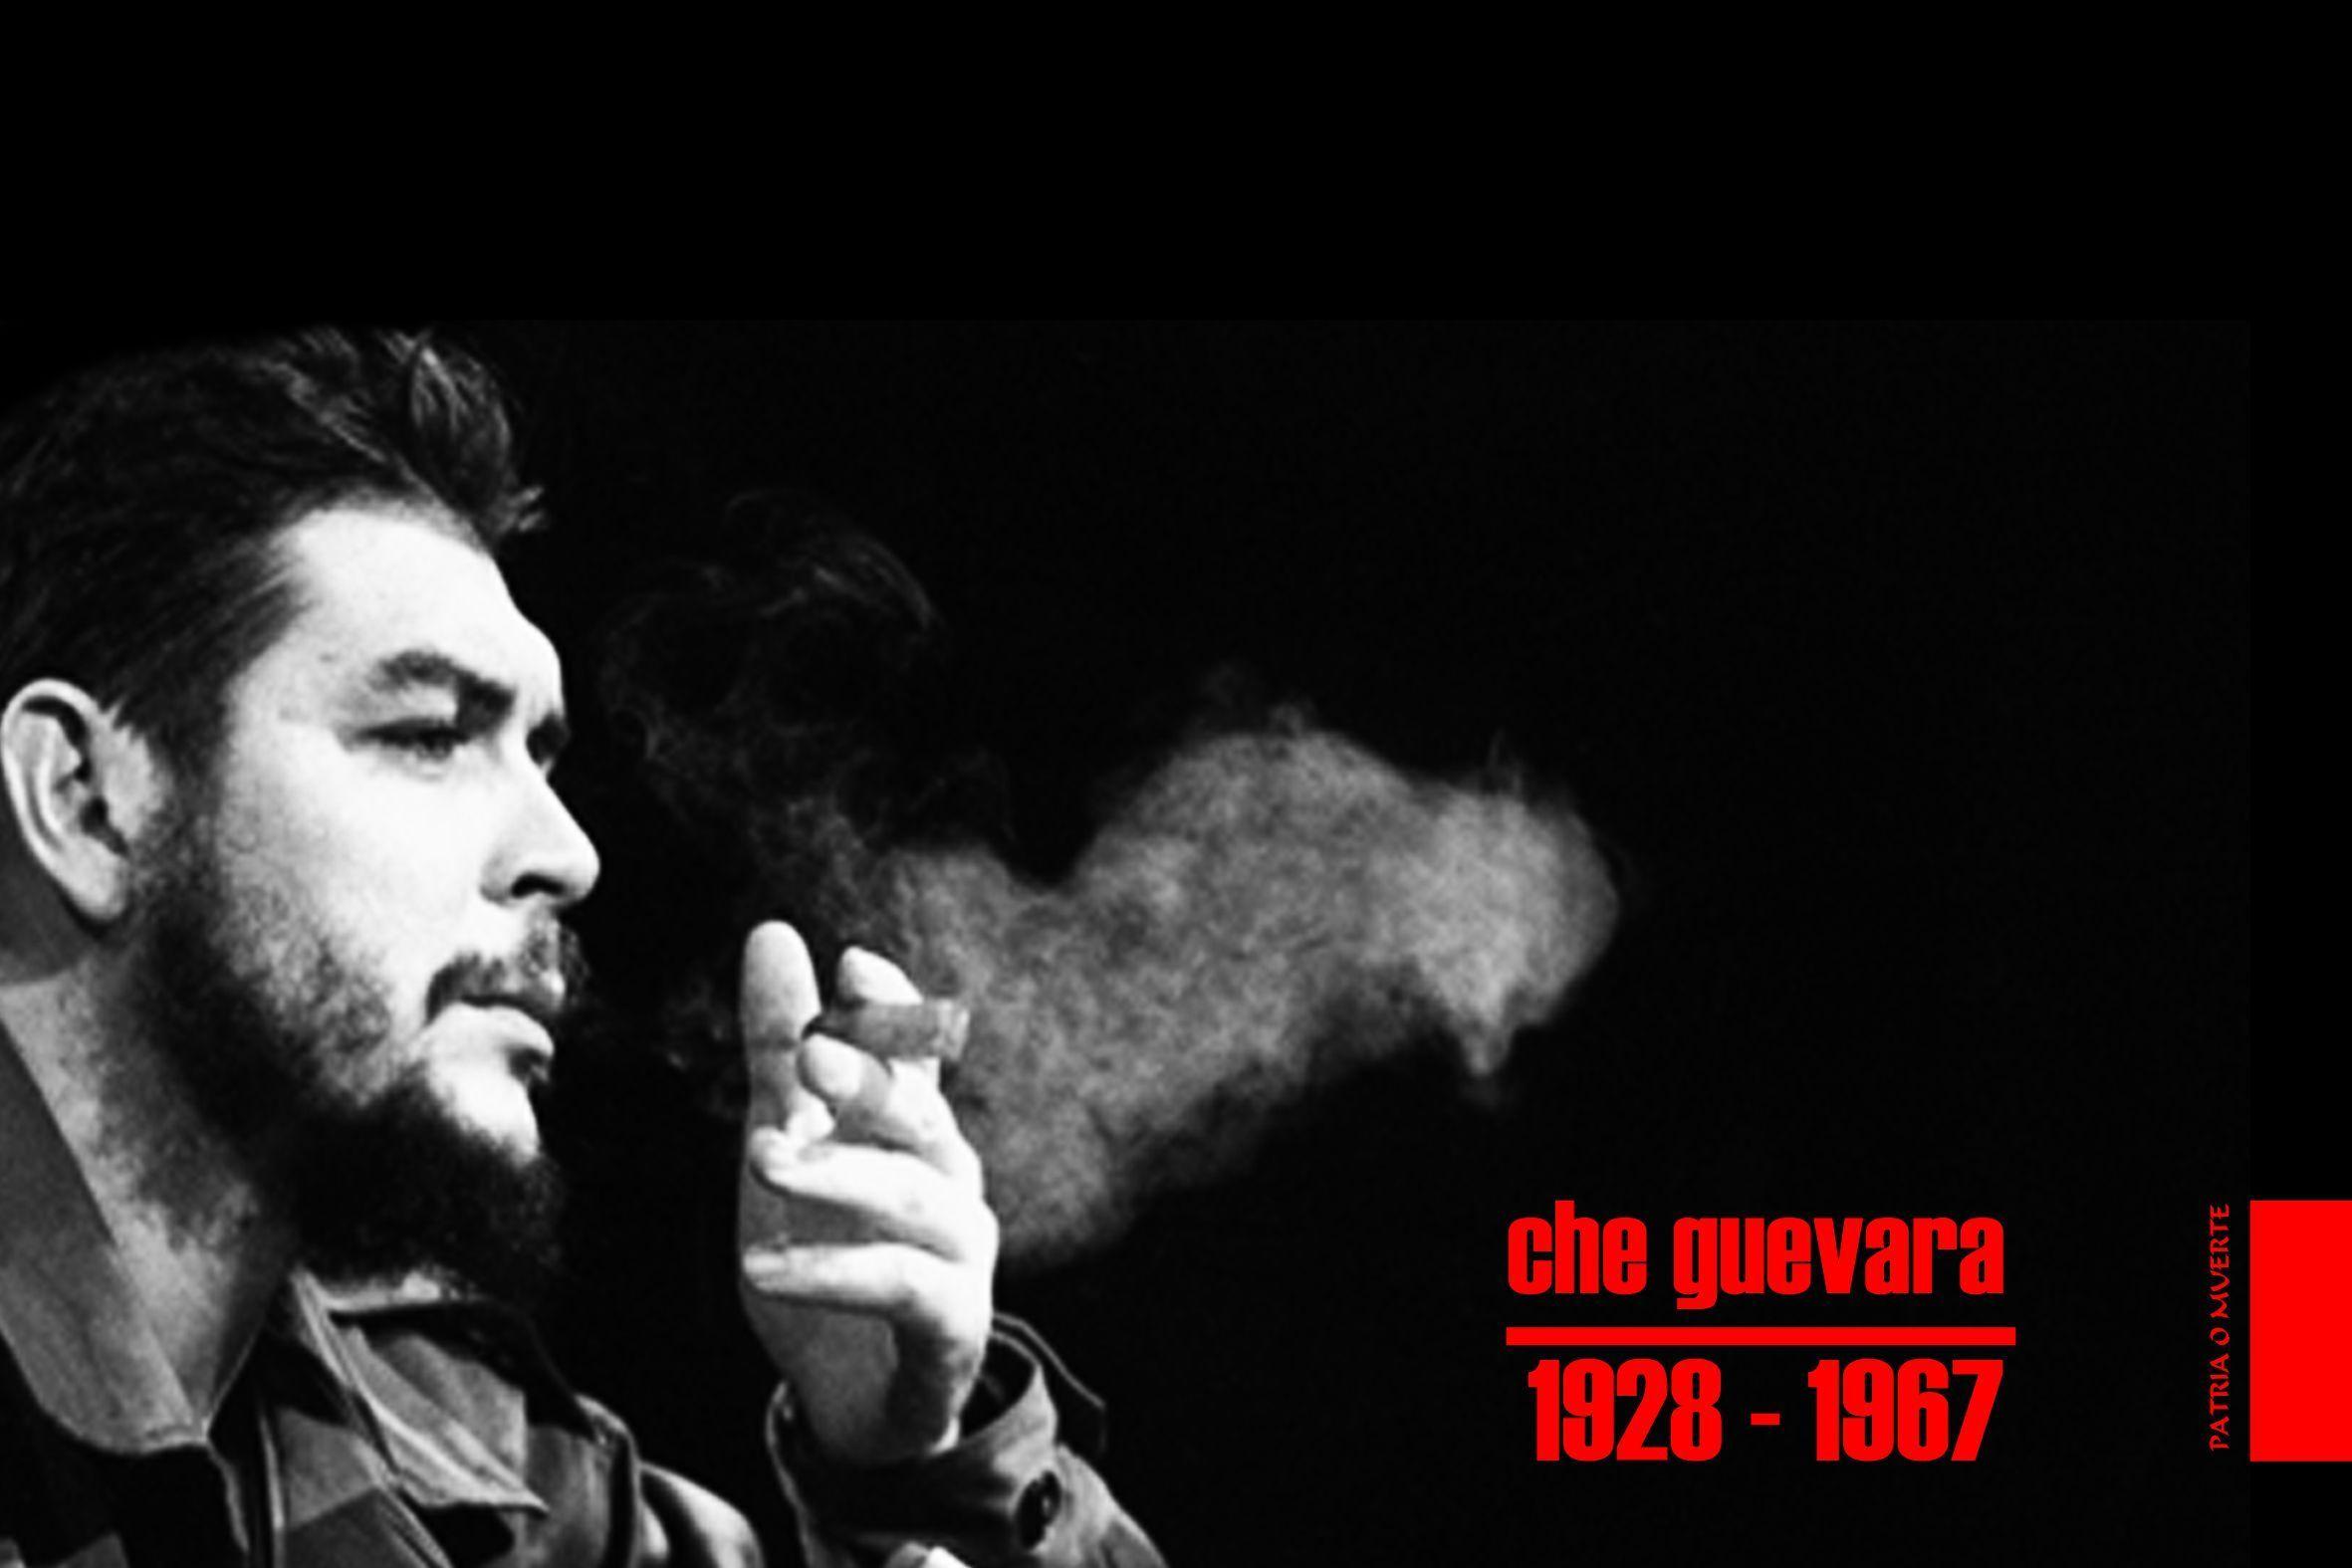 Guevara, for PC & Mac, Tablet, Laptop, Mobile